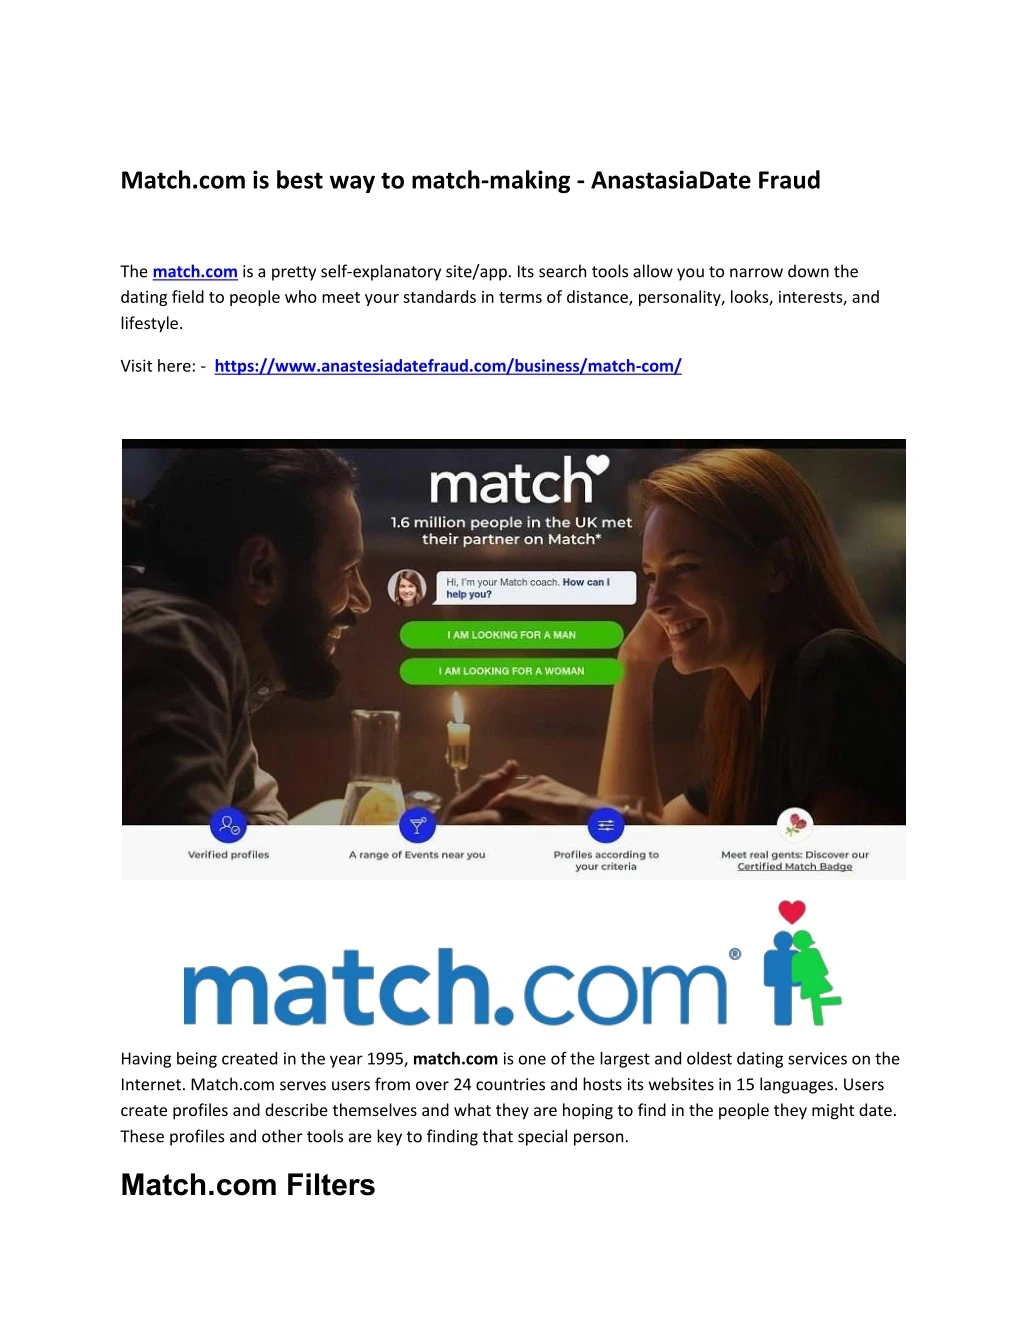 match com is best way to match making